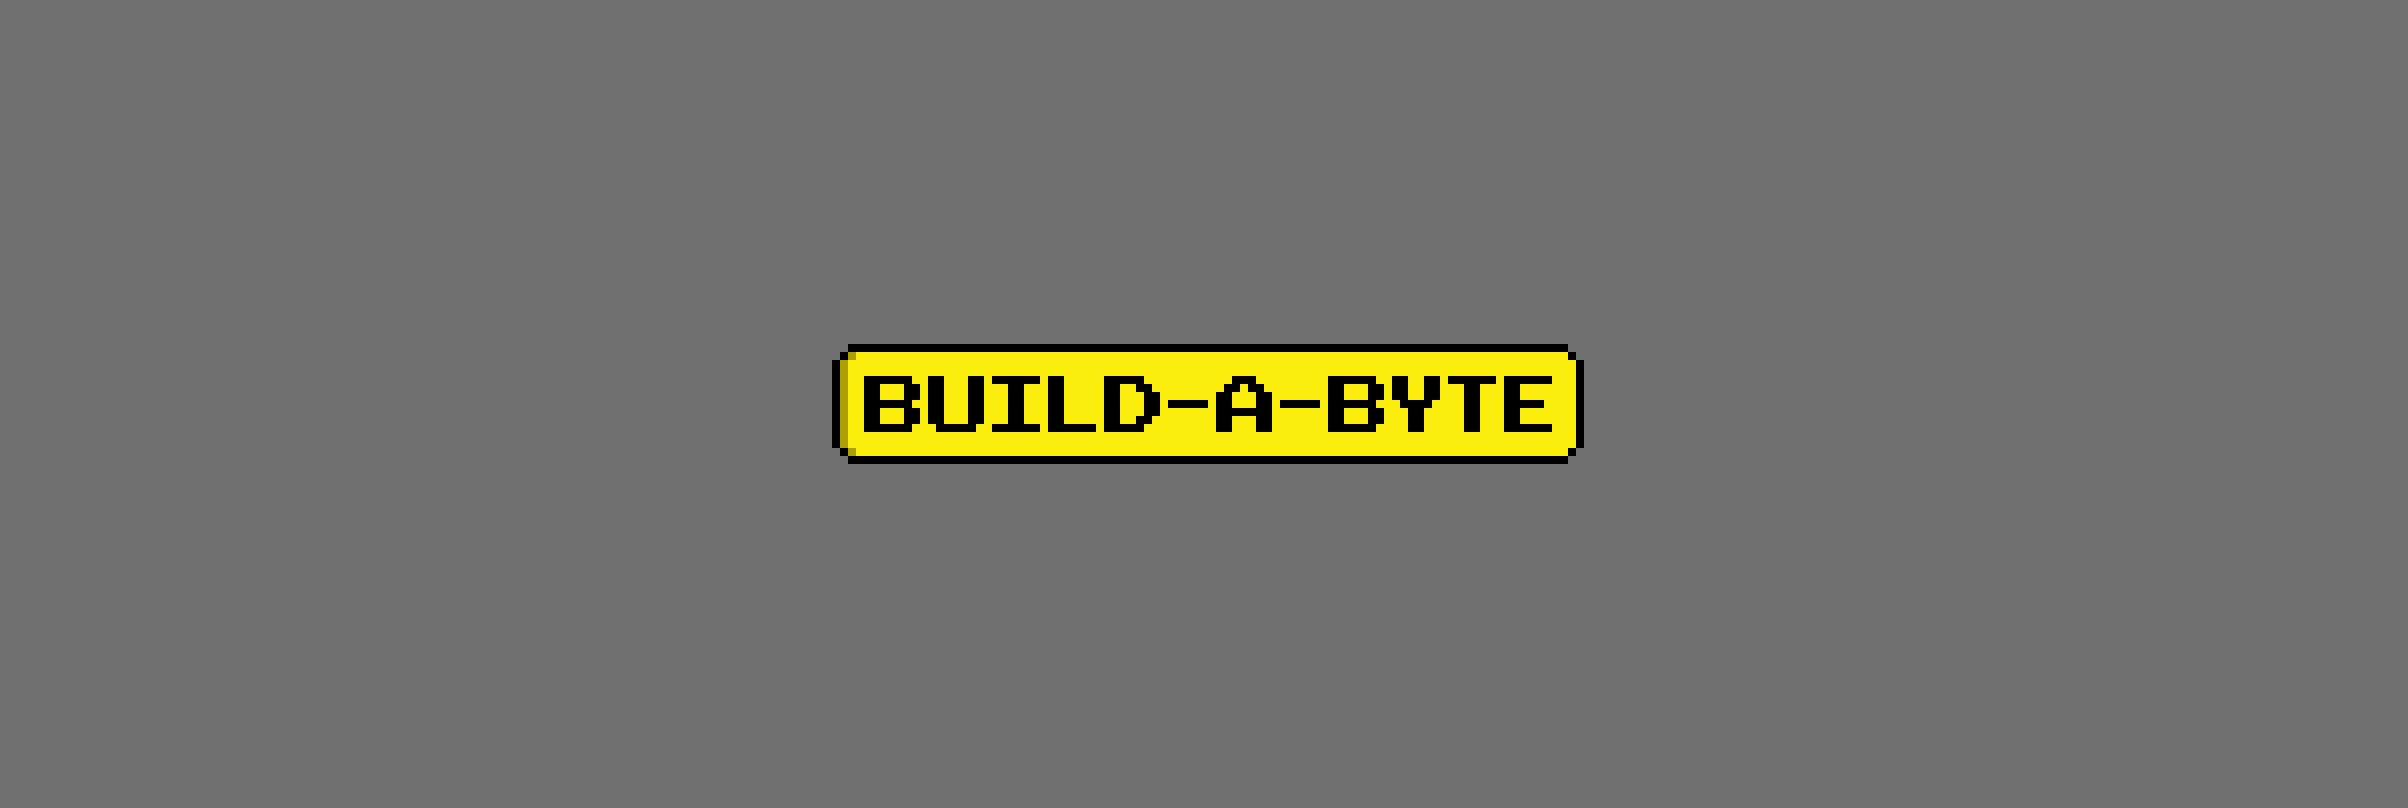 Build-A-Byte Banner